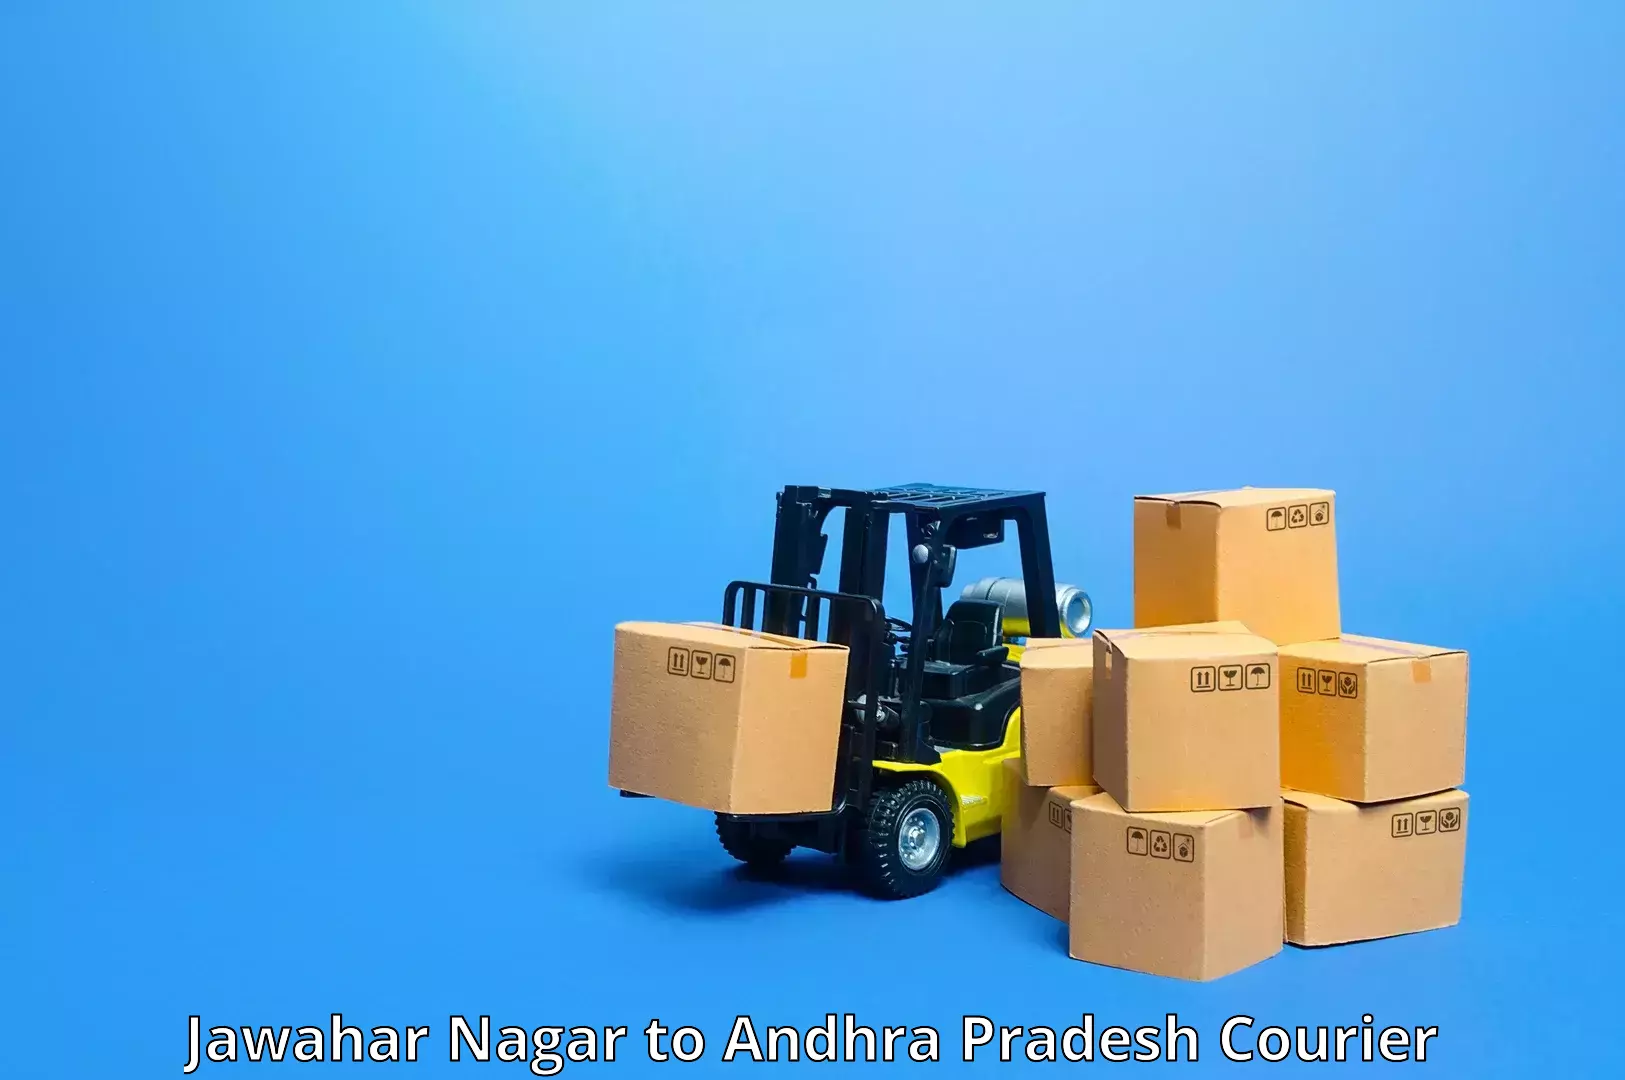 Global courier networks Jawahar Nagar to Gudivada